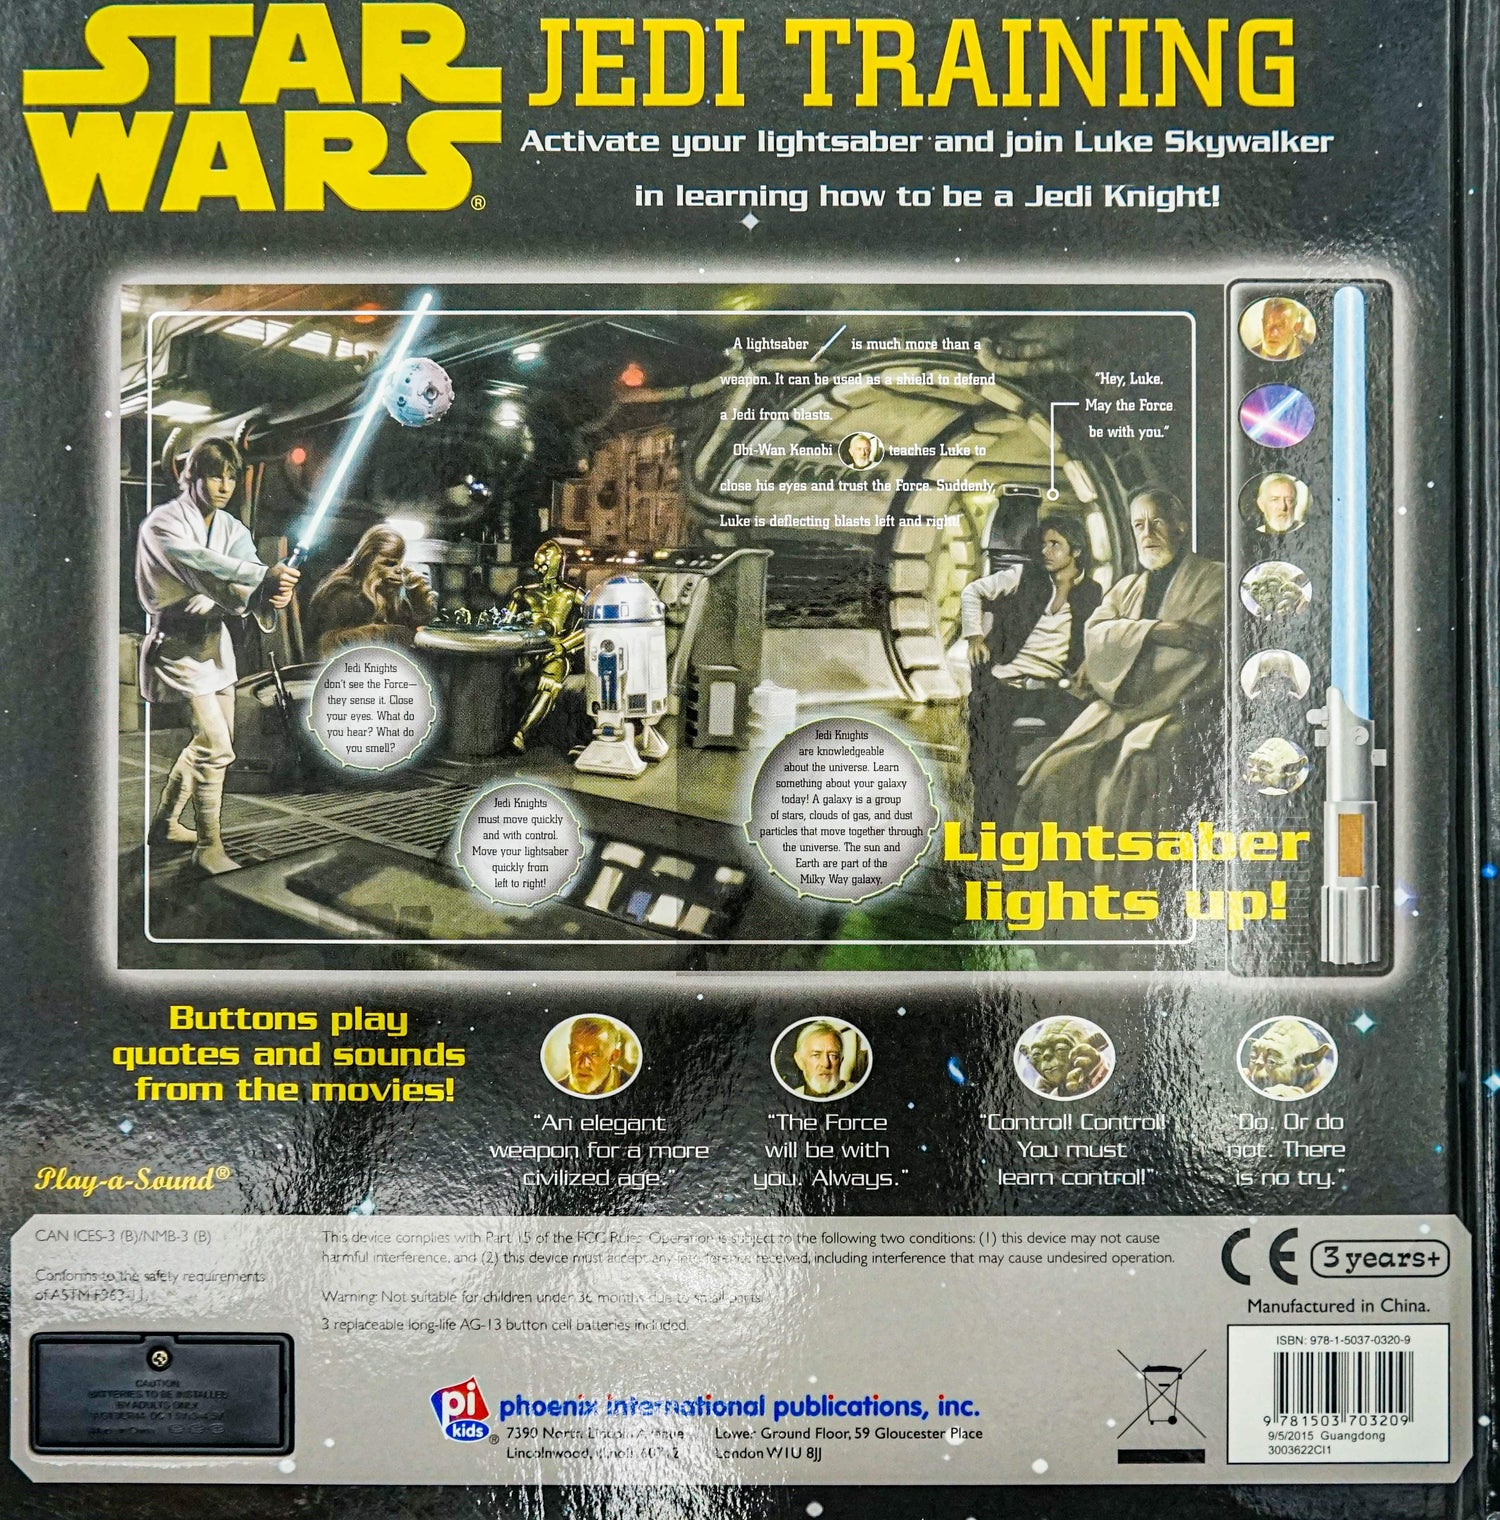 Star Wars: Jedi Training